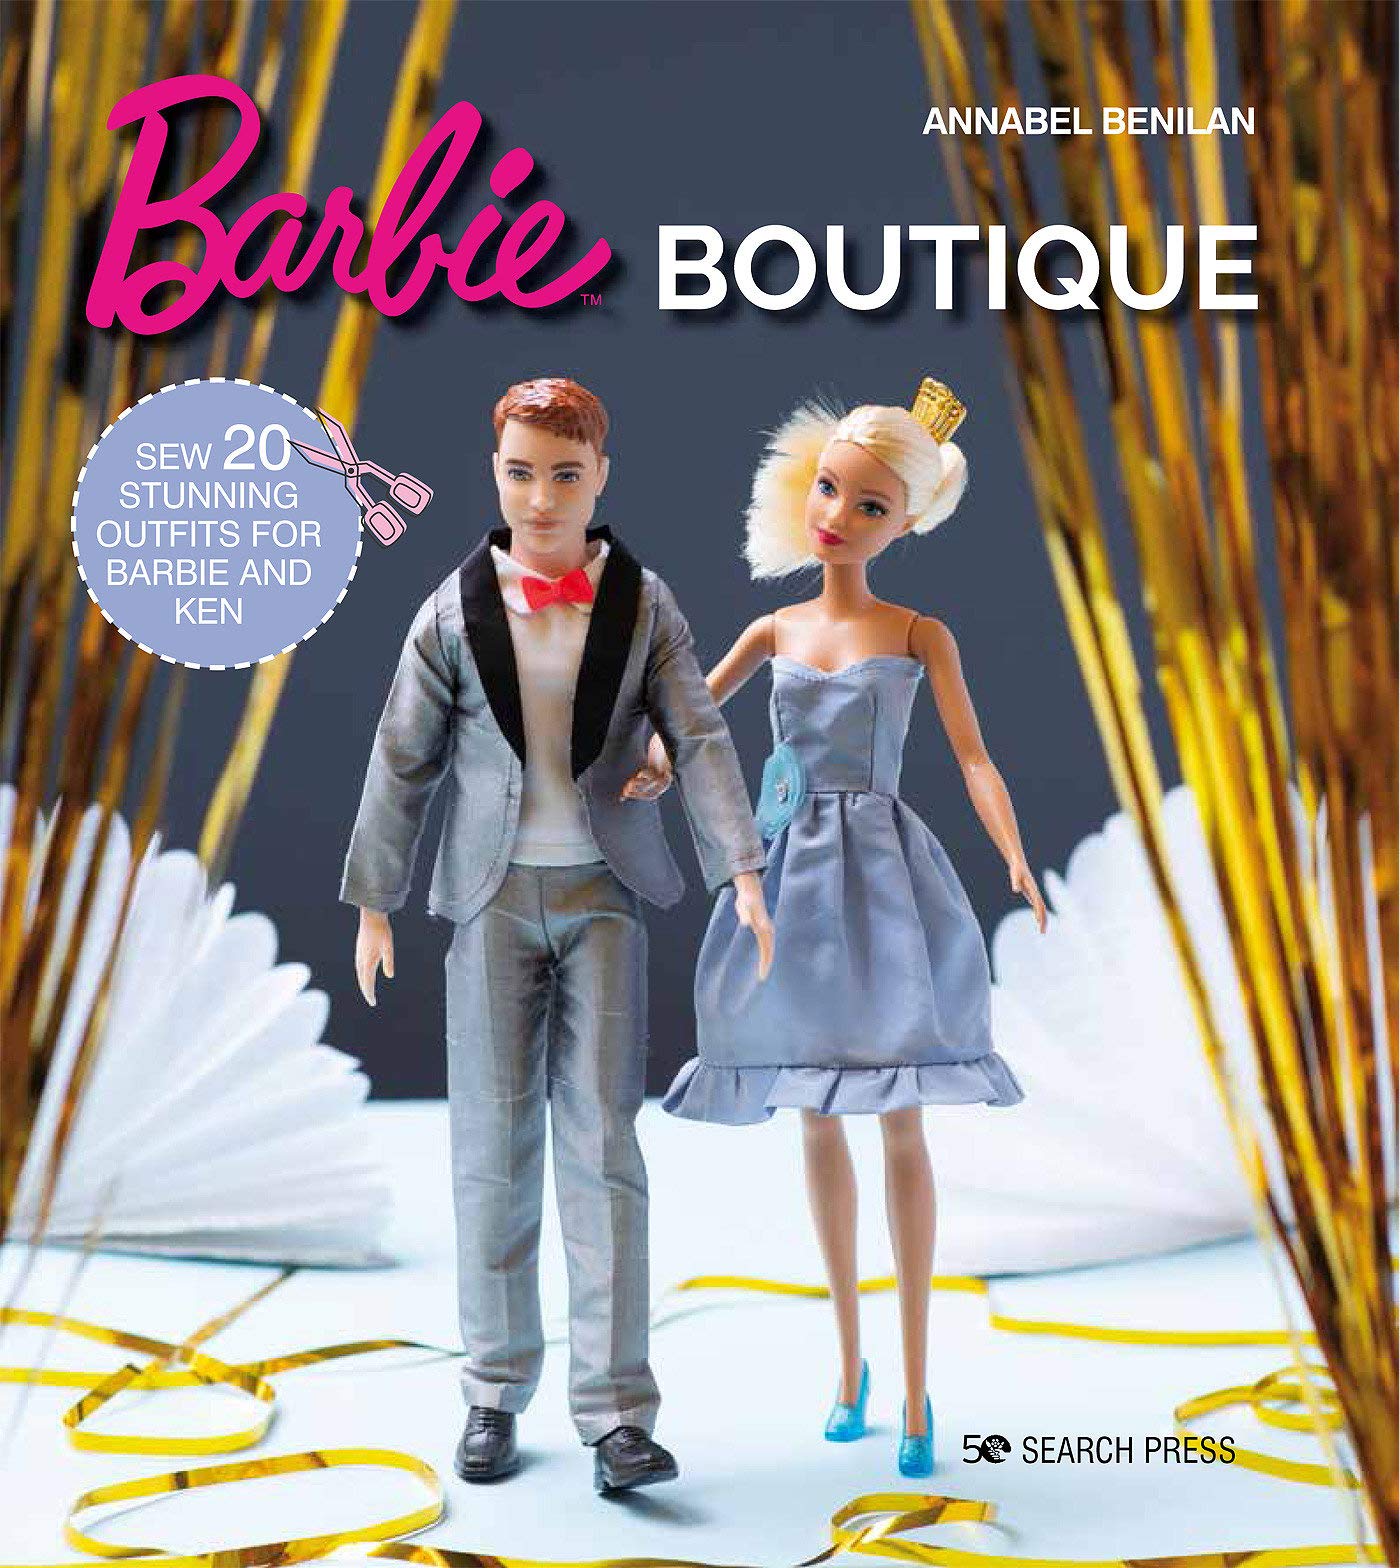 Barbie Boutique Annabel Benilan